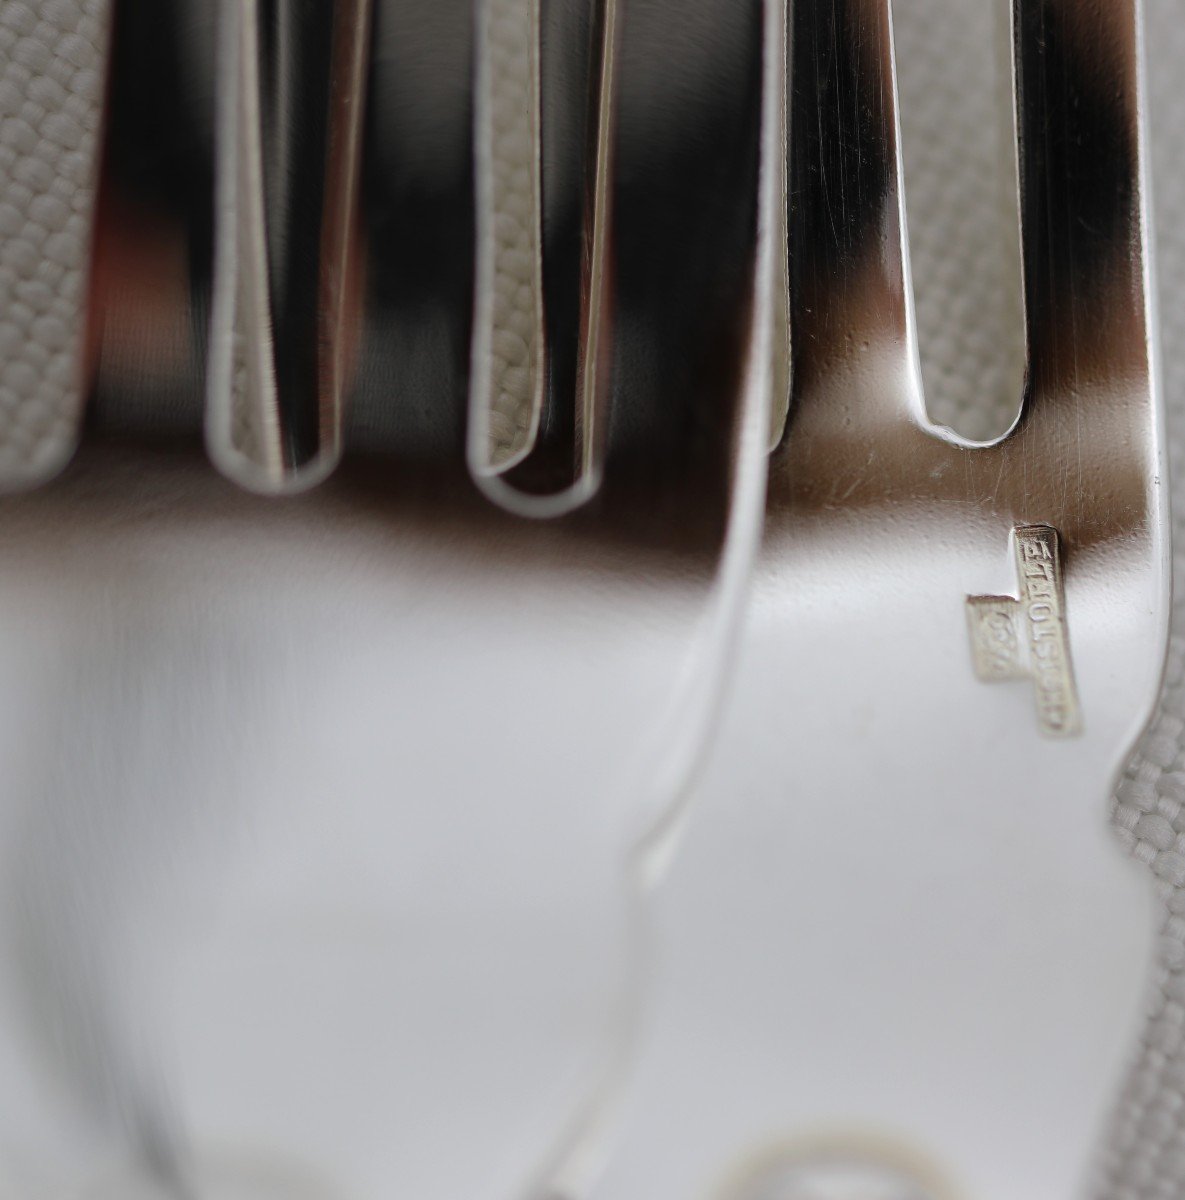 Christofle Versailles Model, 12 Fish Cutlery, 24 Pieces, Silver Metal, Excellent Condition.-photo-5